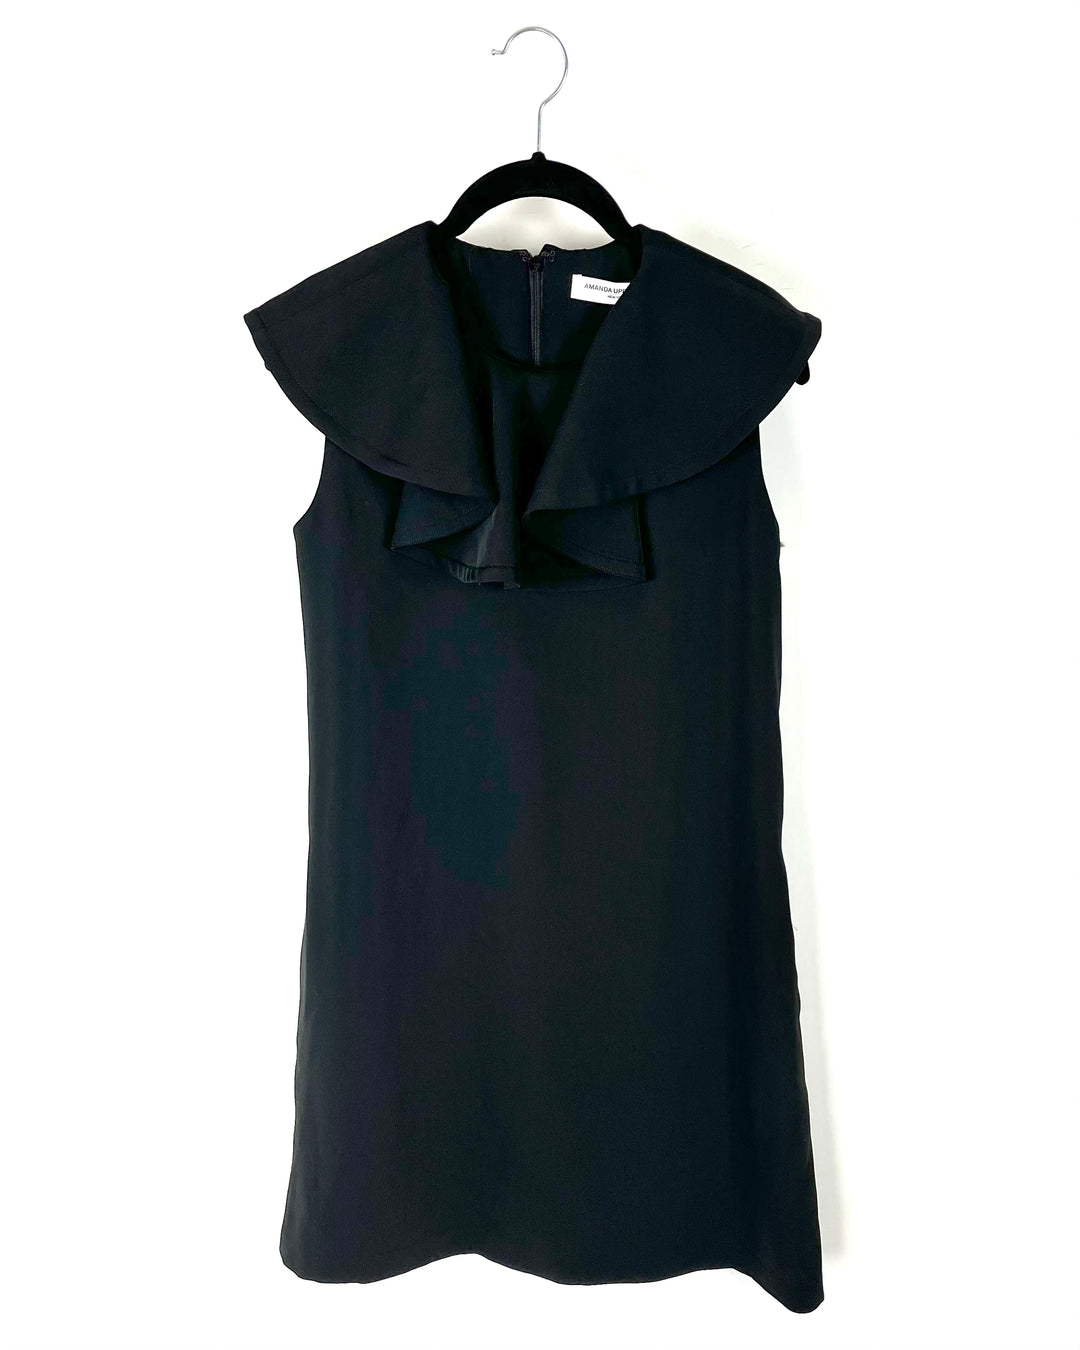 Black Ruffle Top Dress - Size 4-6